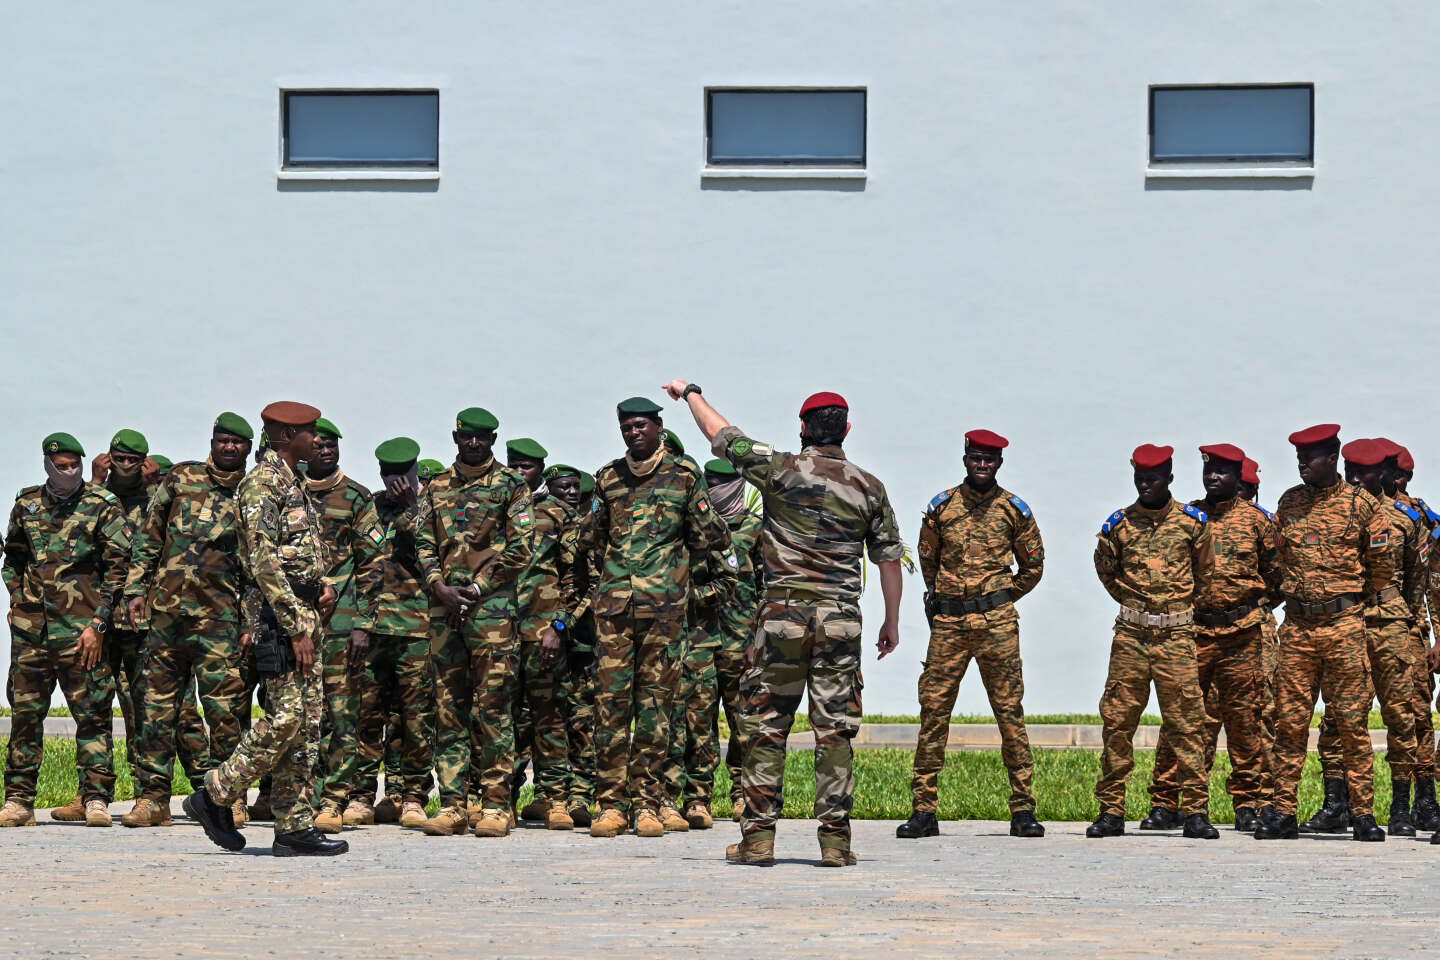 Le Burkina Faso et le Niger quittent la force antidjihadiste G5 Sahel